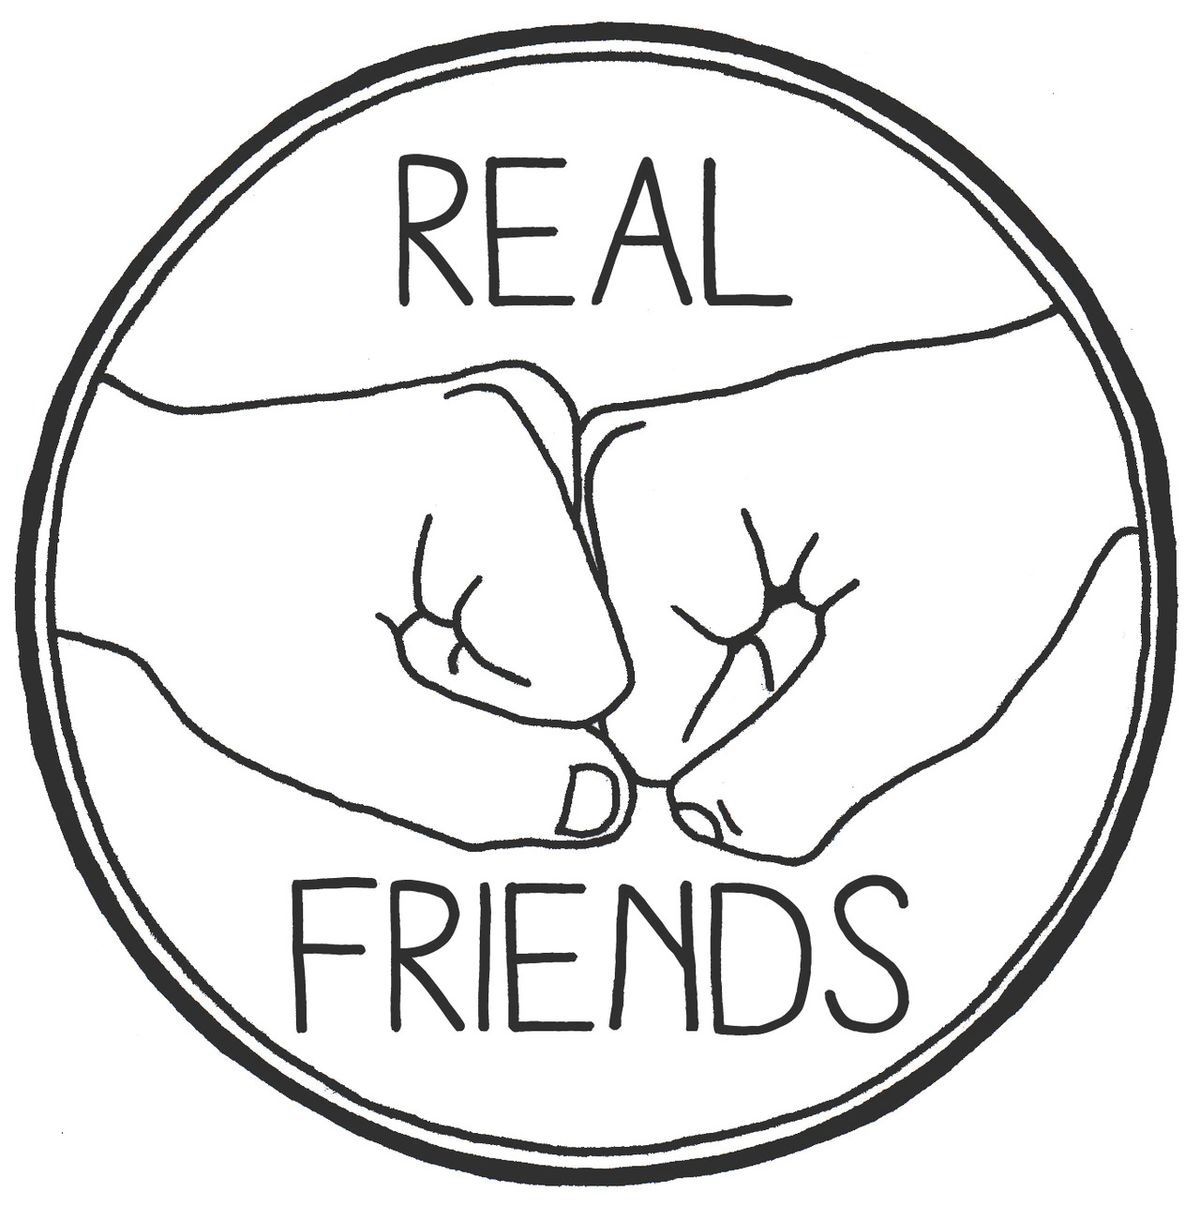 Real friends friendship.